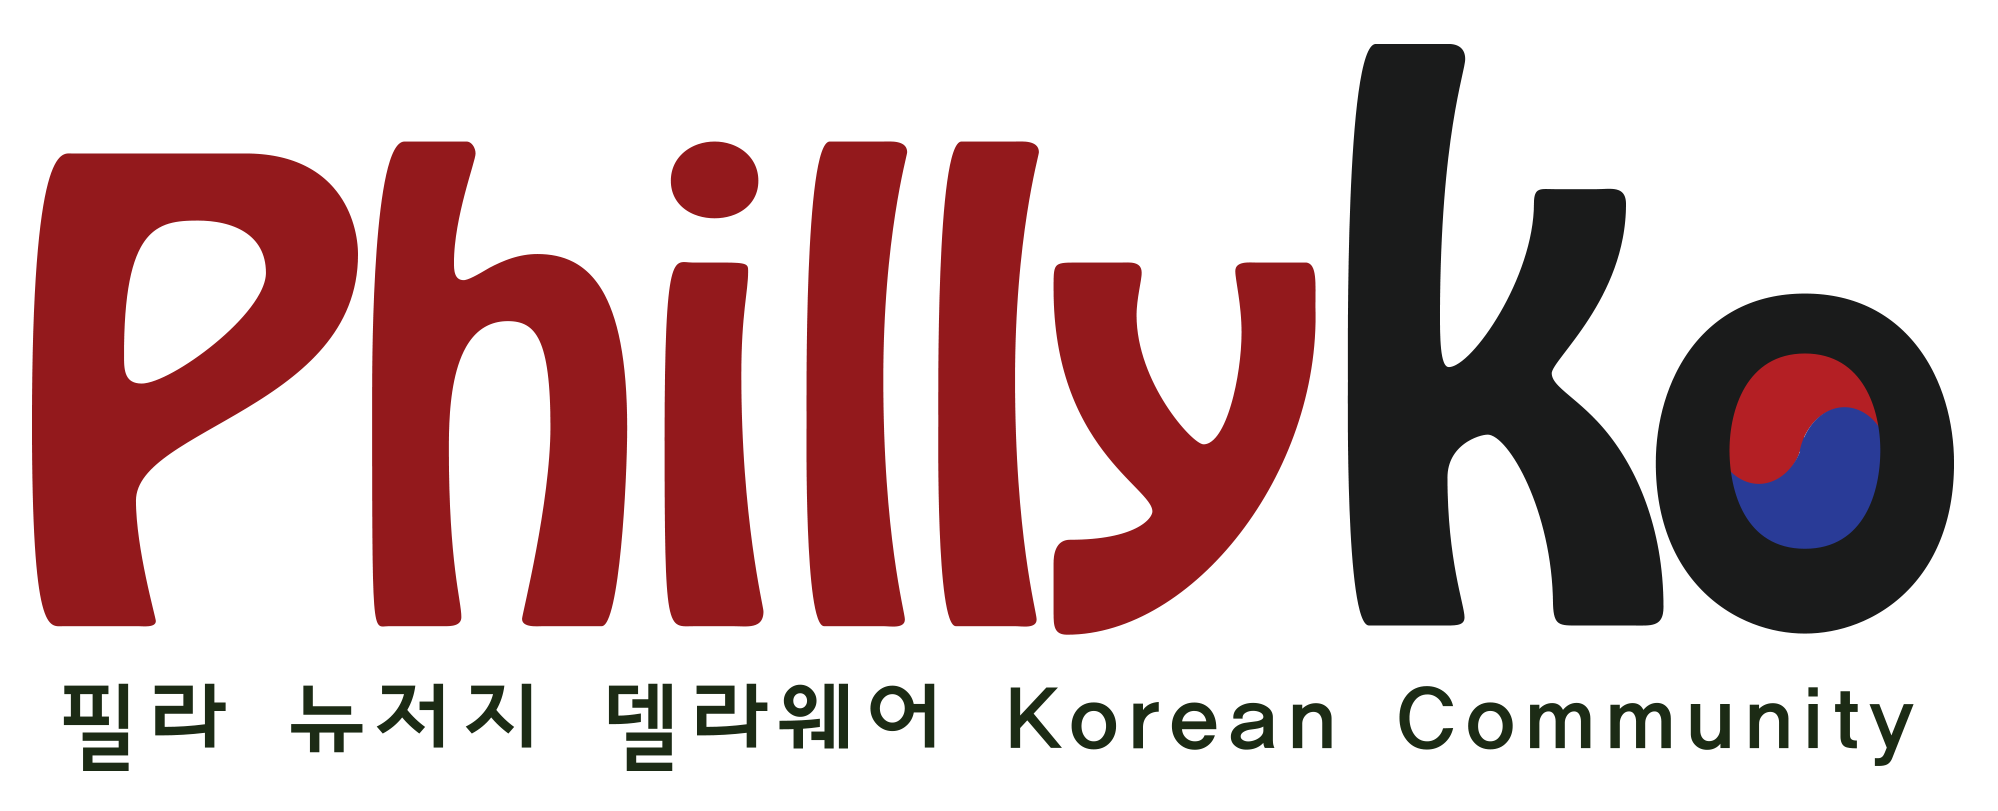 PhillyKo Korean Community in PA, NJ, DE